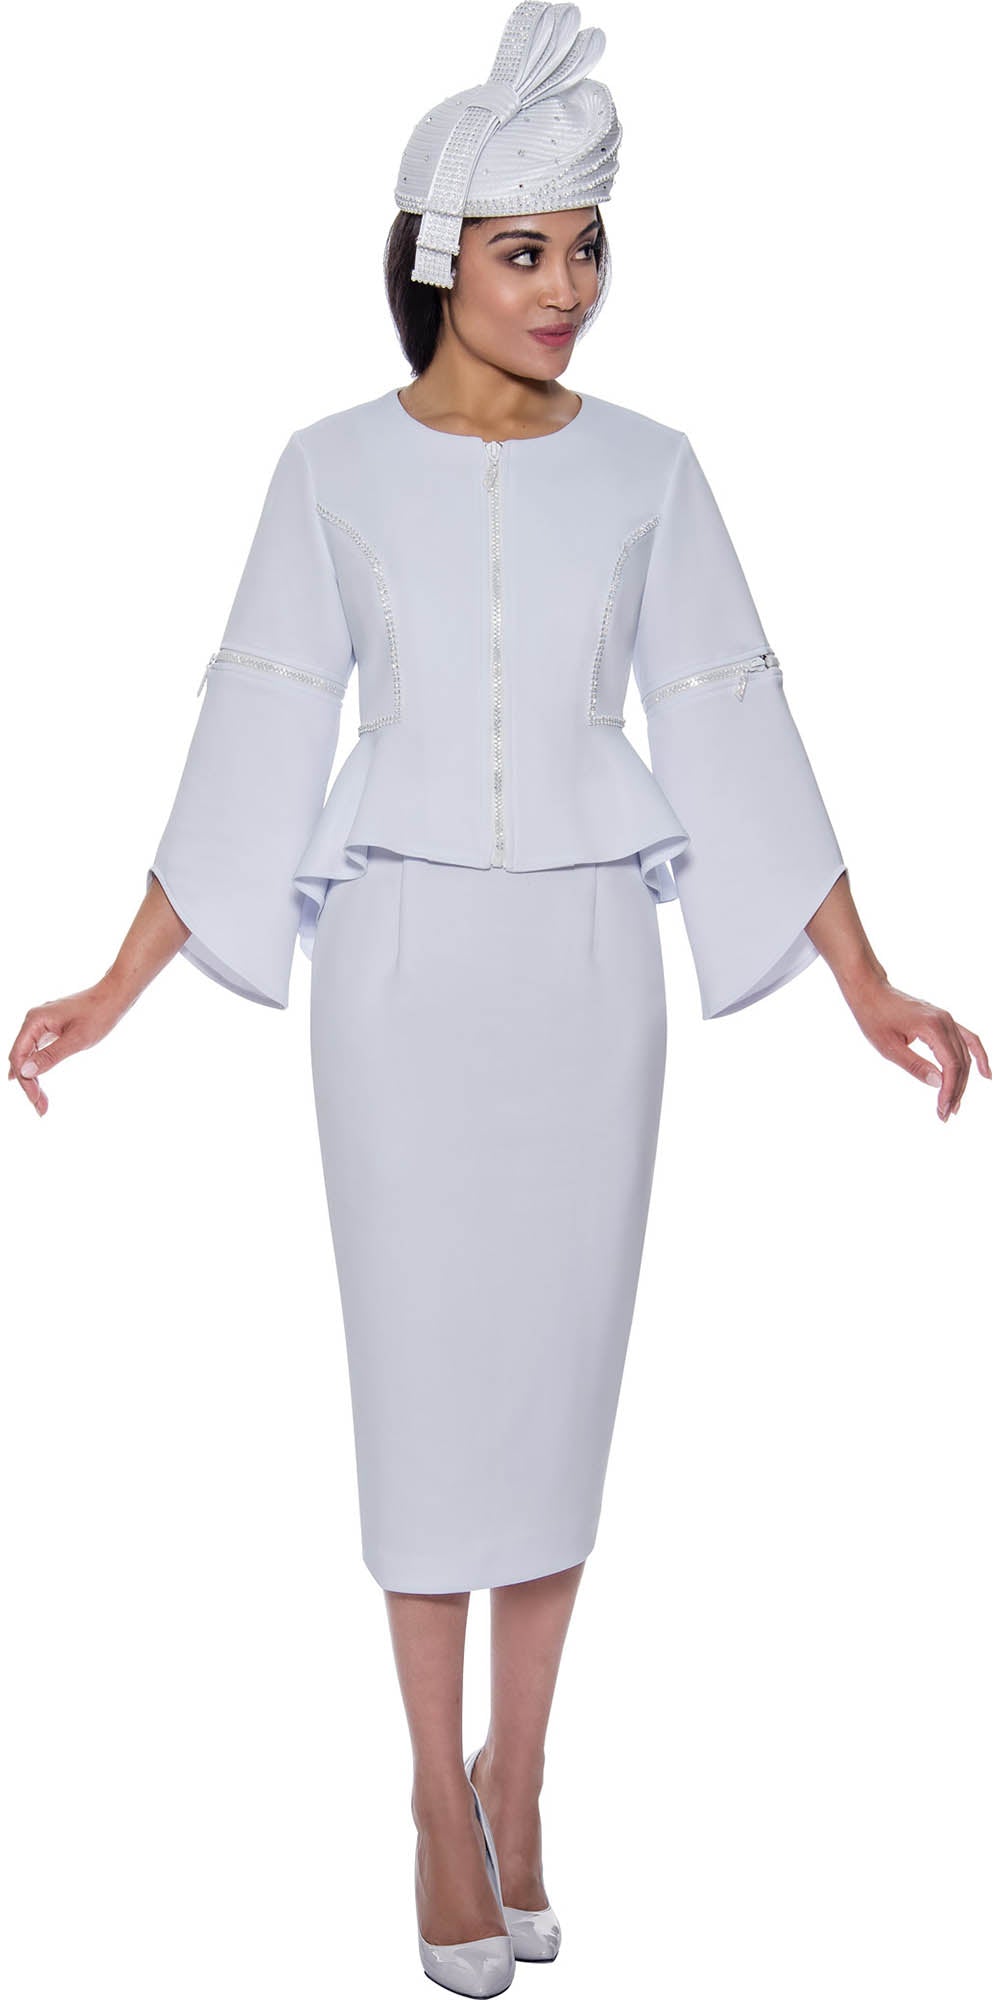 GMI G9562 - White 2PC Zipper Trim Suit with Detachable Sleeves